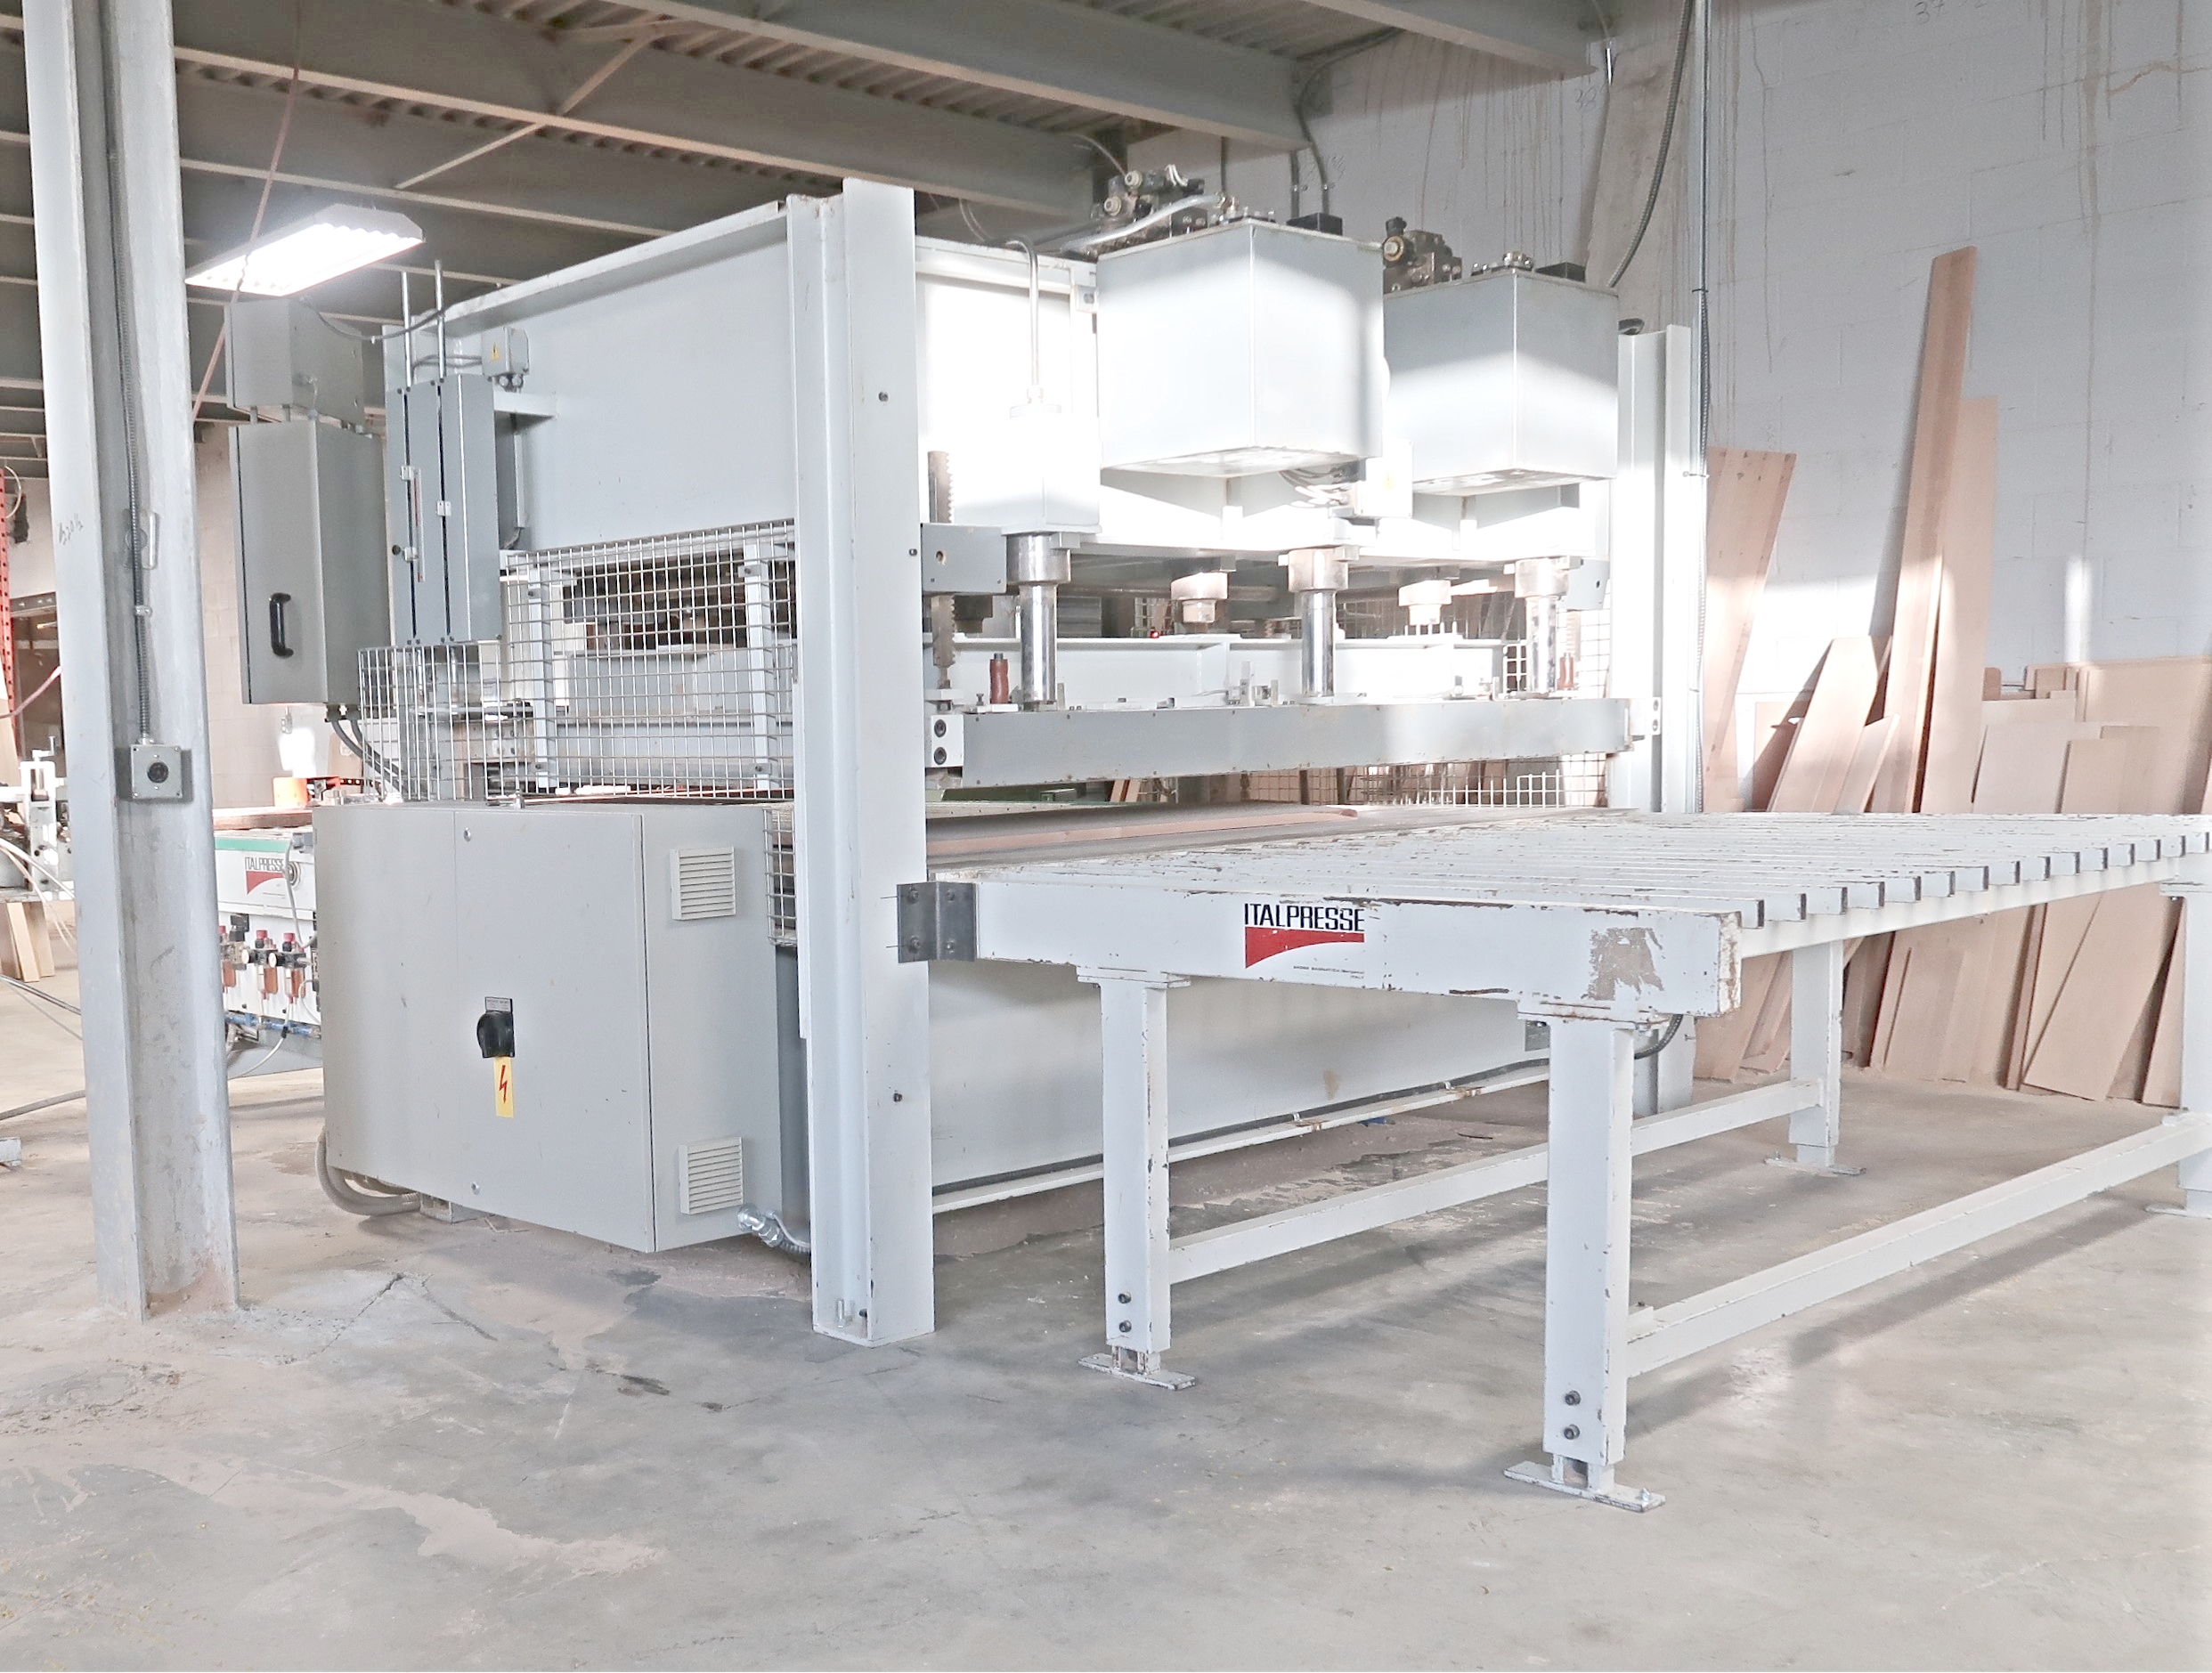 Italpresse Solid Wood Press (used) Item # UGW-112 (Canada)